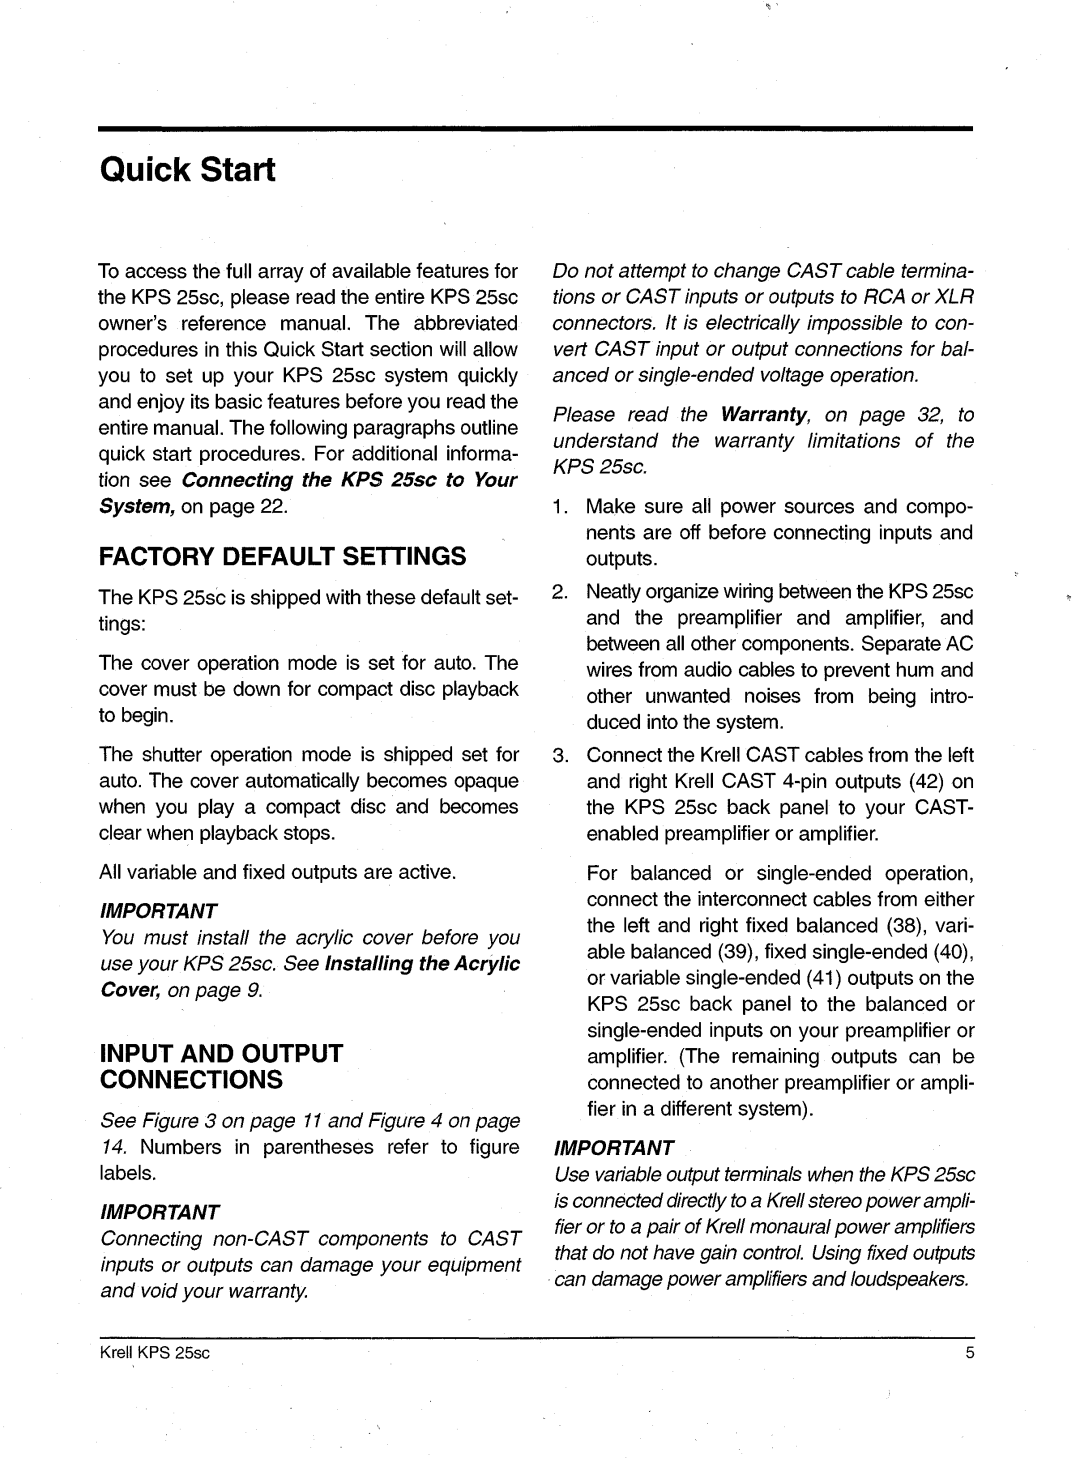 Krell Industries KPS 25sc manual QuickStart, Factorydefaultsettings, Input And Output Connections 